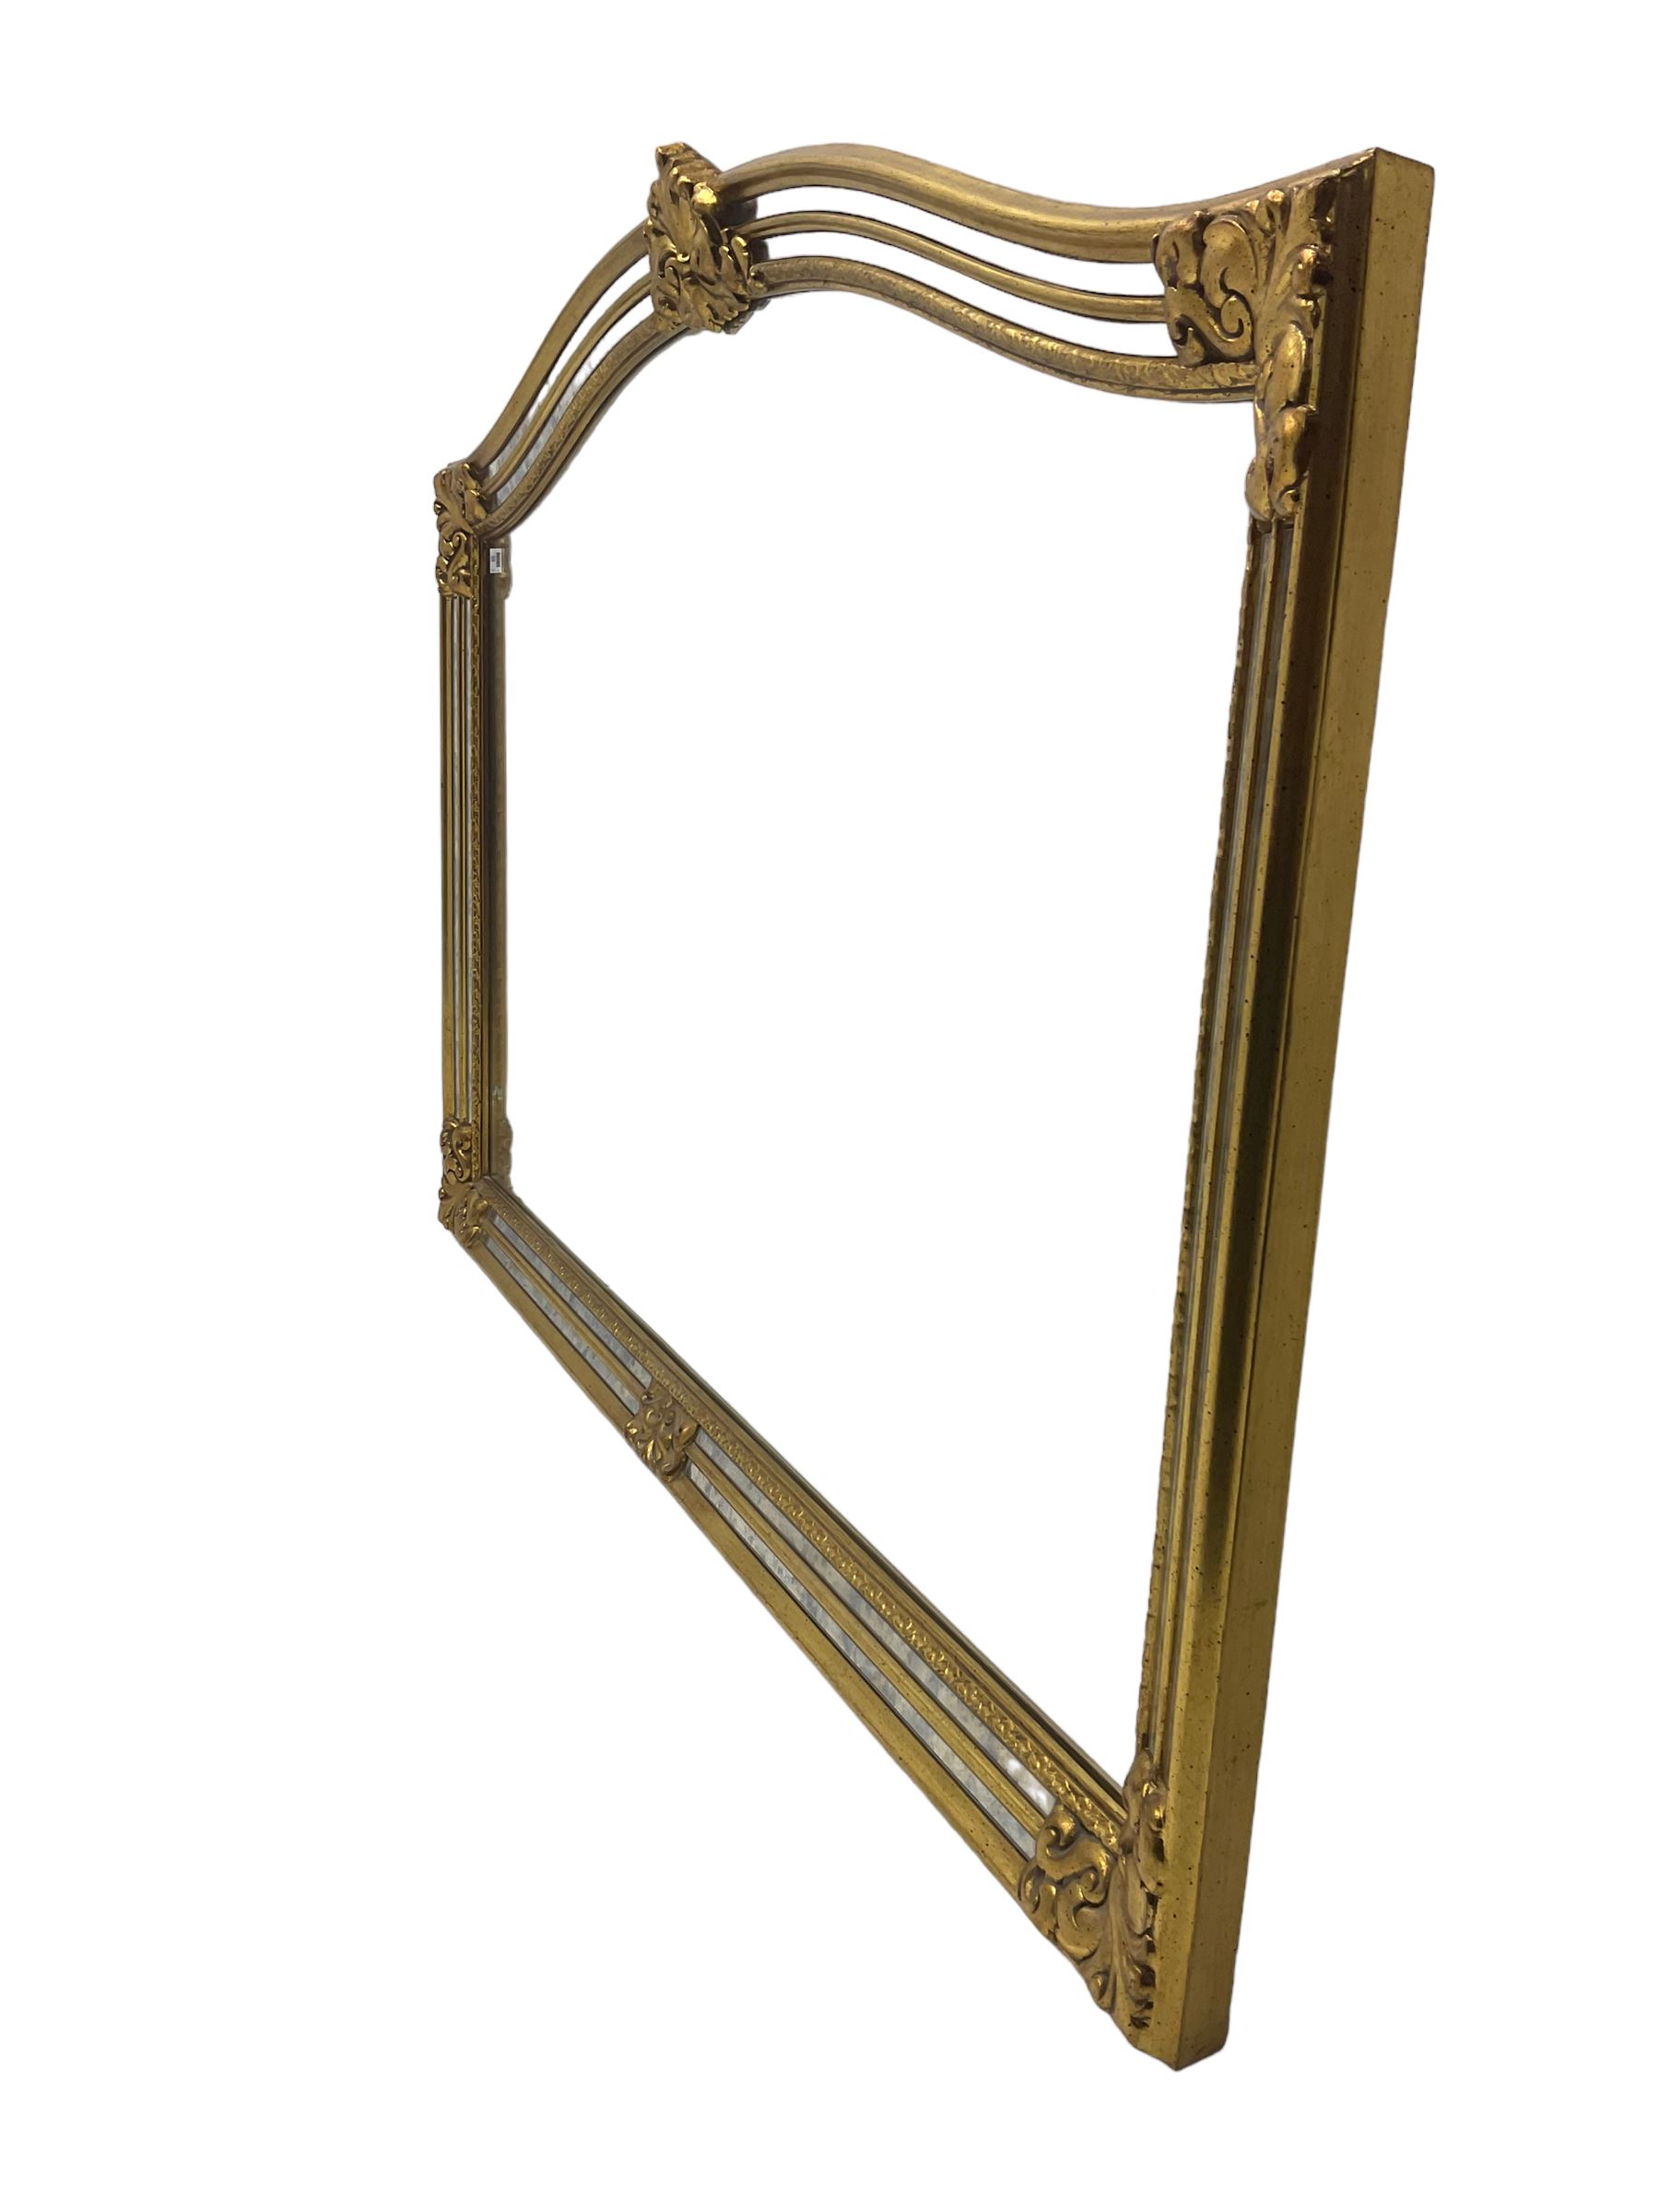 Deknudt Mirrors - Belgian gilt cushion framed wall mirror - Image 2 of 3